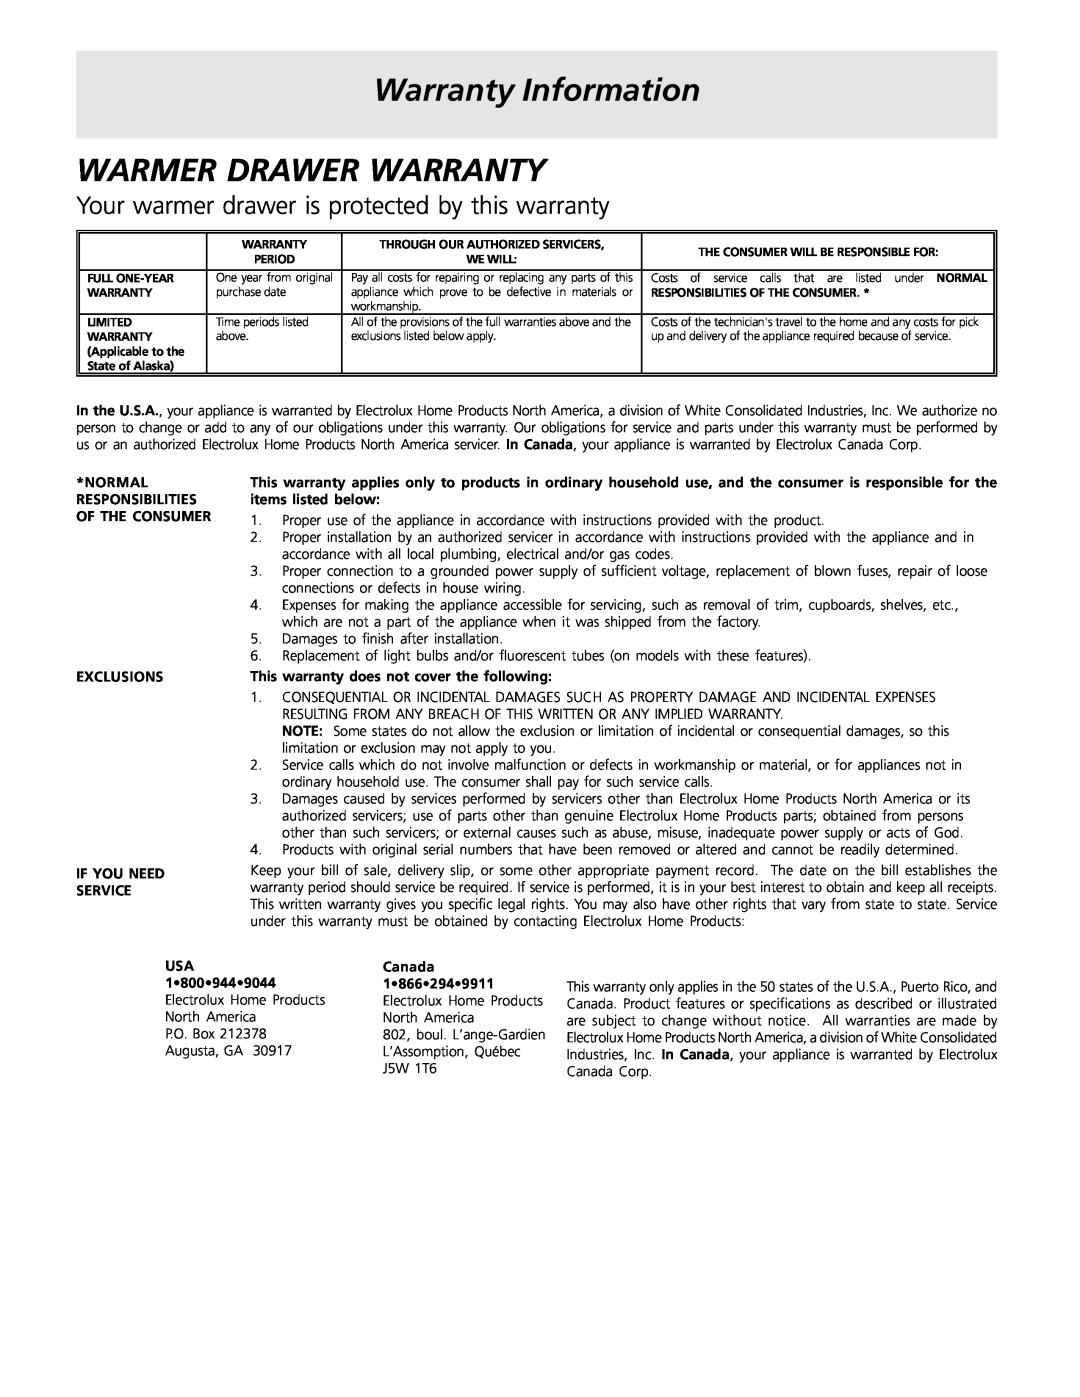 Frigidaire Warm & Serve Drawer Warranty Information, Warmer Drawer Warranty, Normal Responsibilities Of The Consumer 